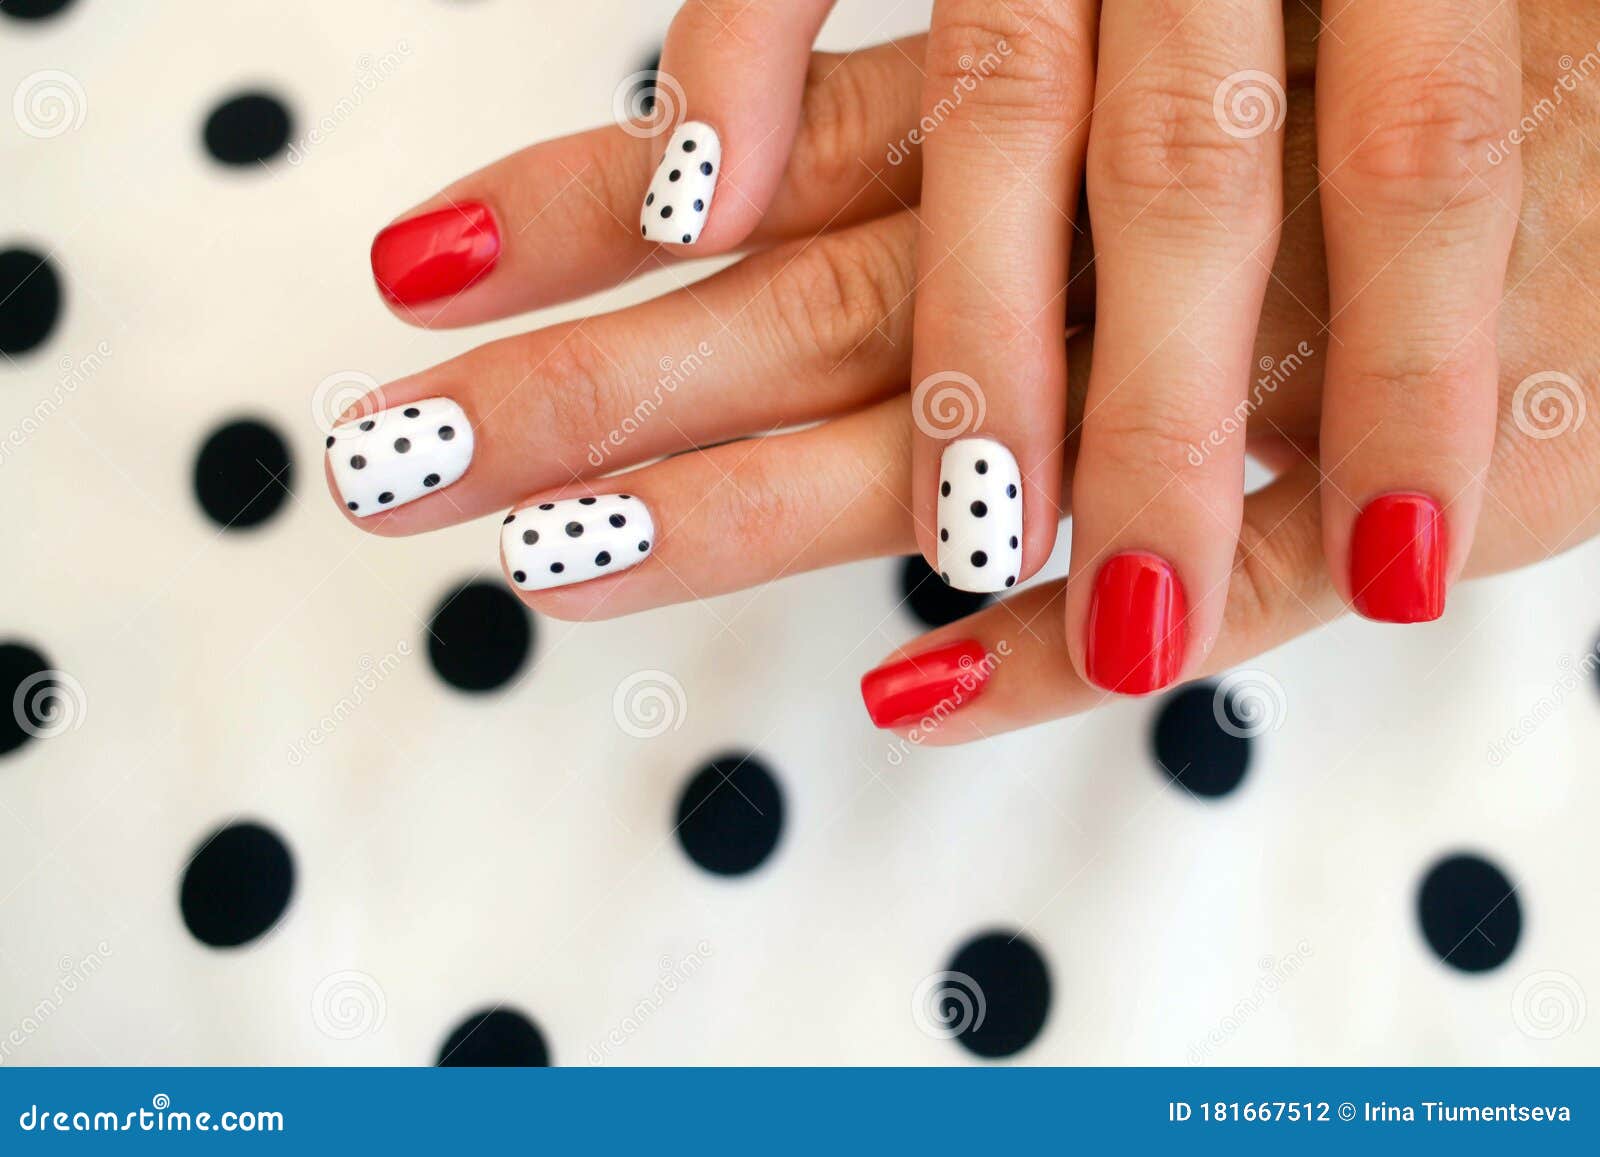 22 Lovely Polka Dot Nail Designs - Pretty Designs